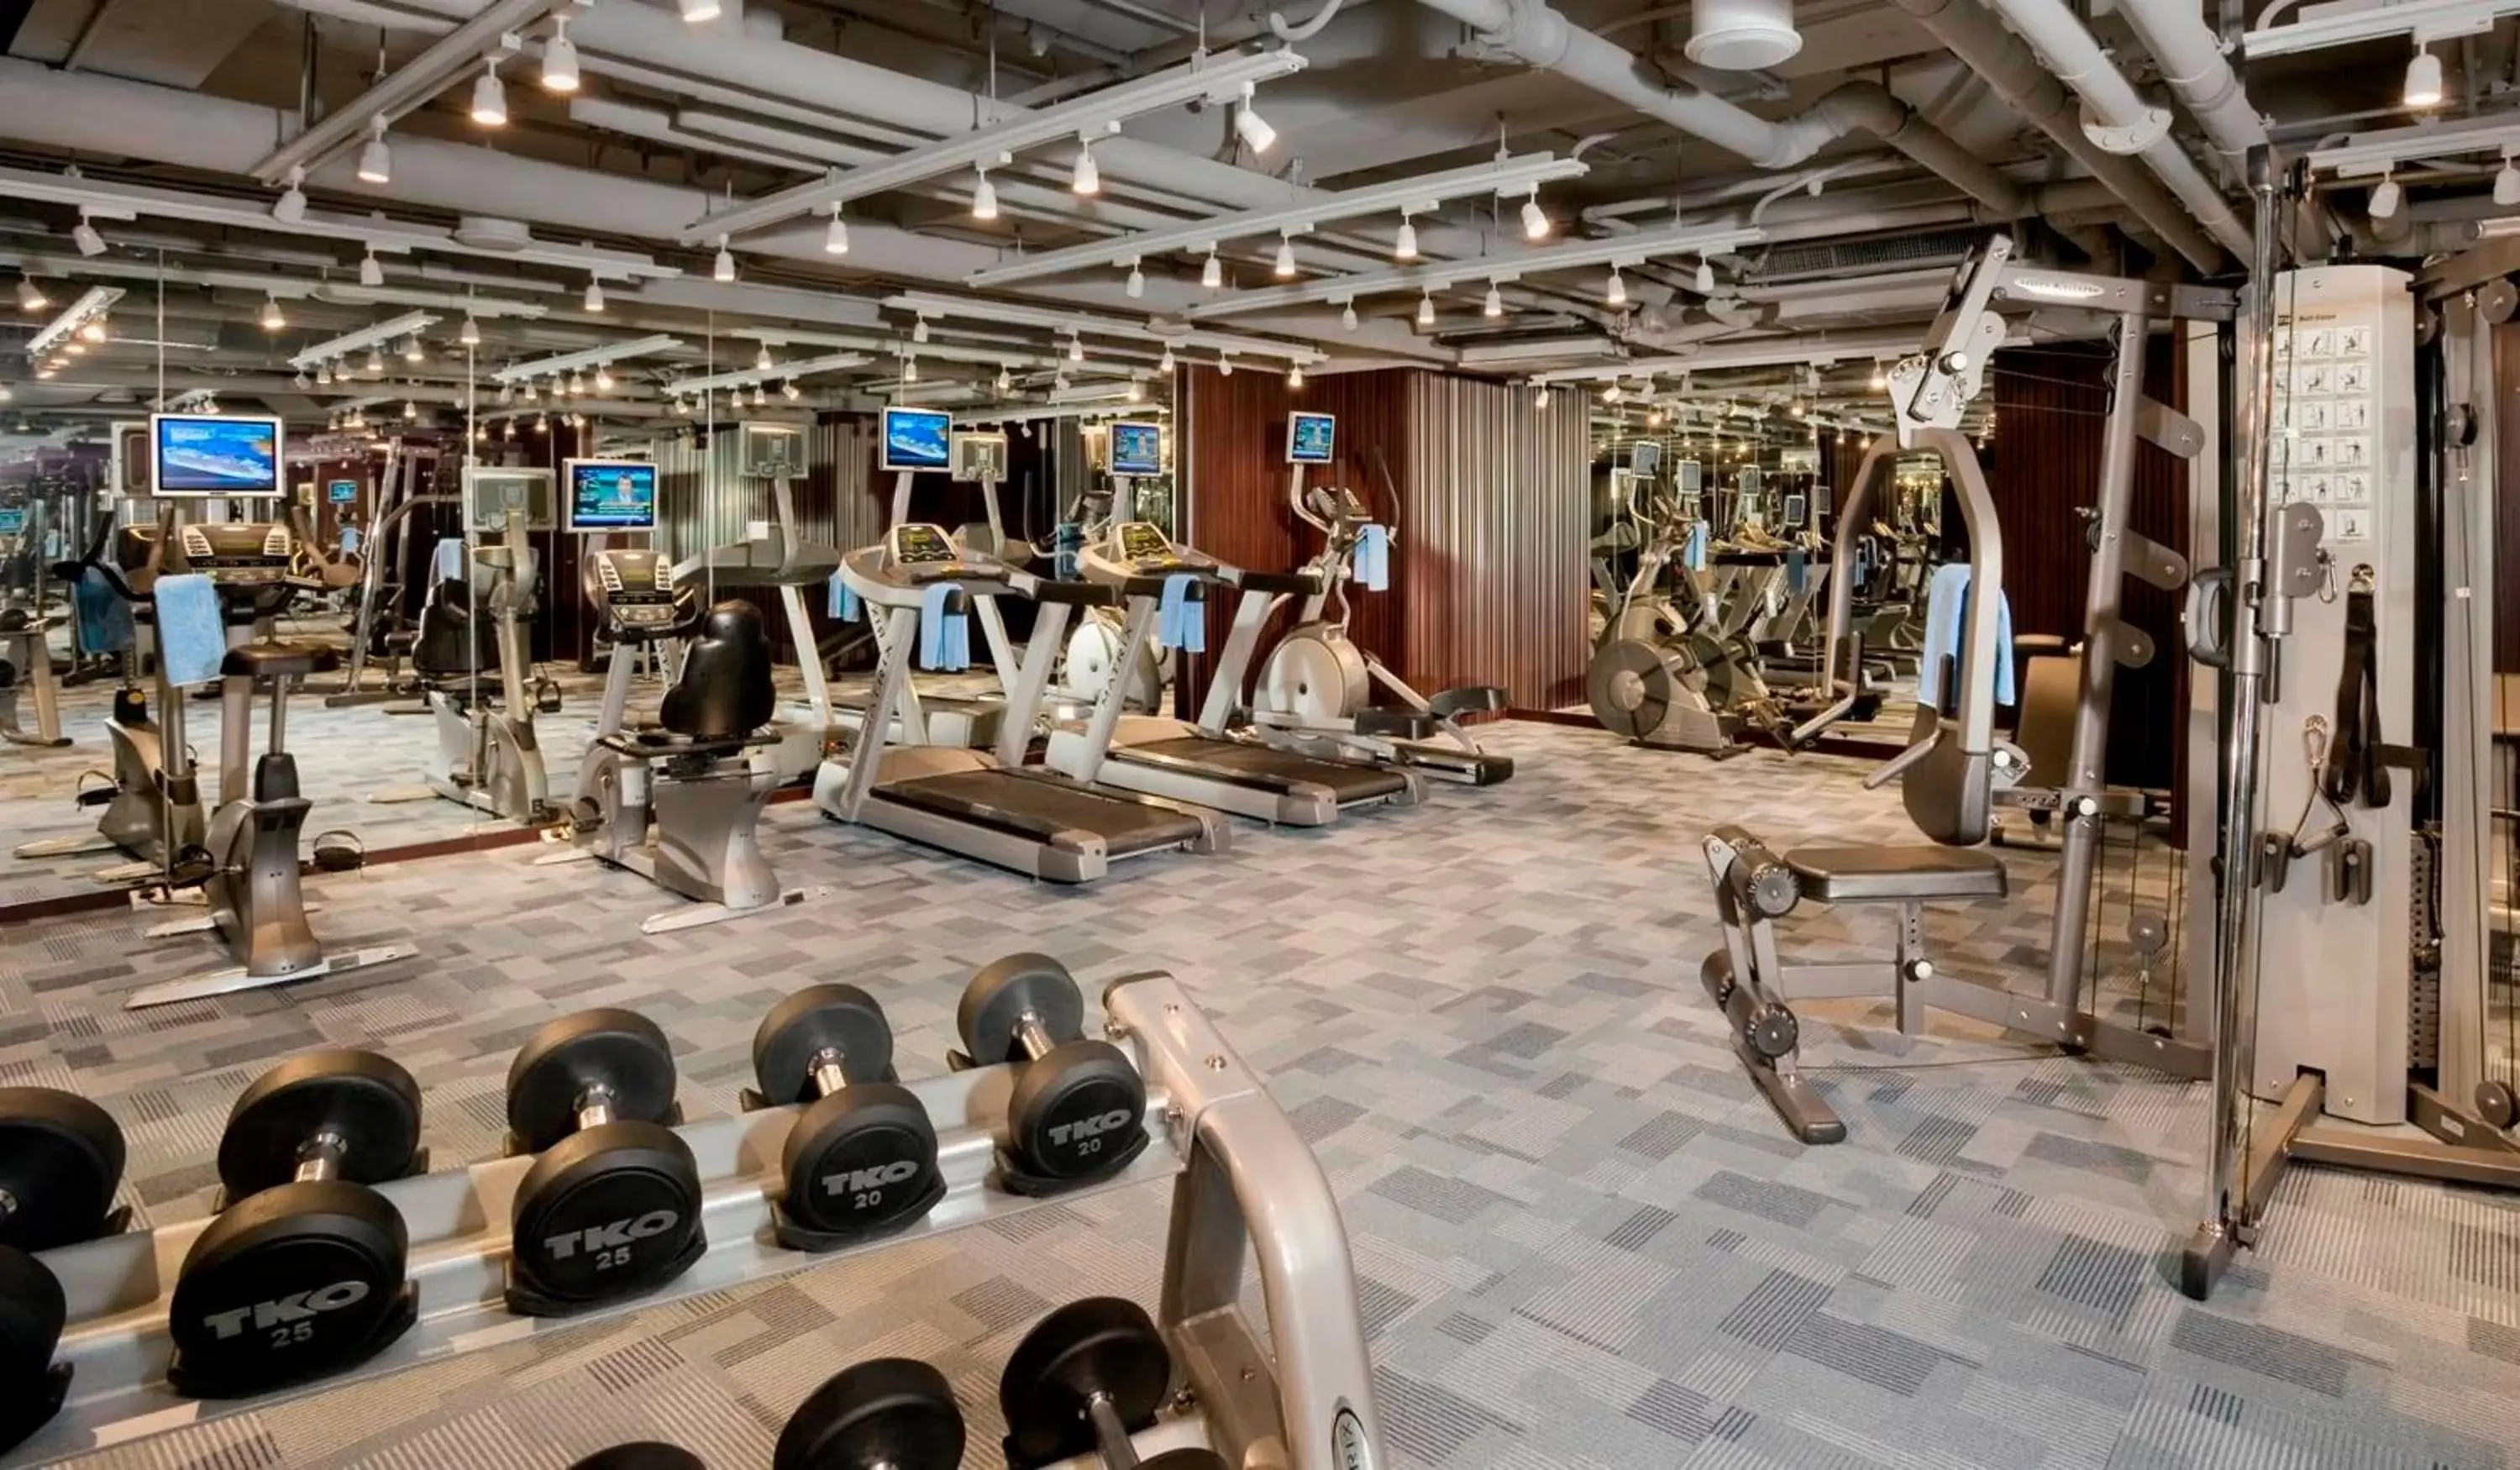 Fitness centre/facilities, Fitness Center/Facilities in Regal Hongkong Hotel